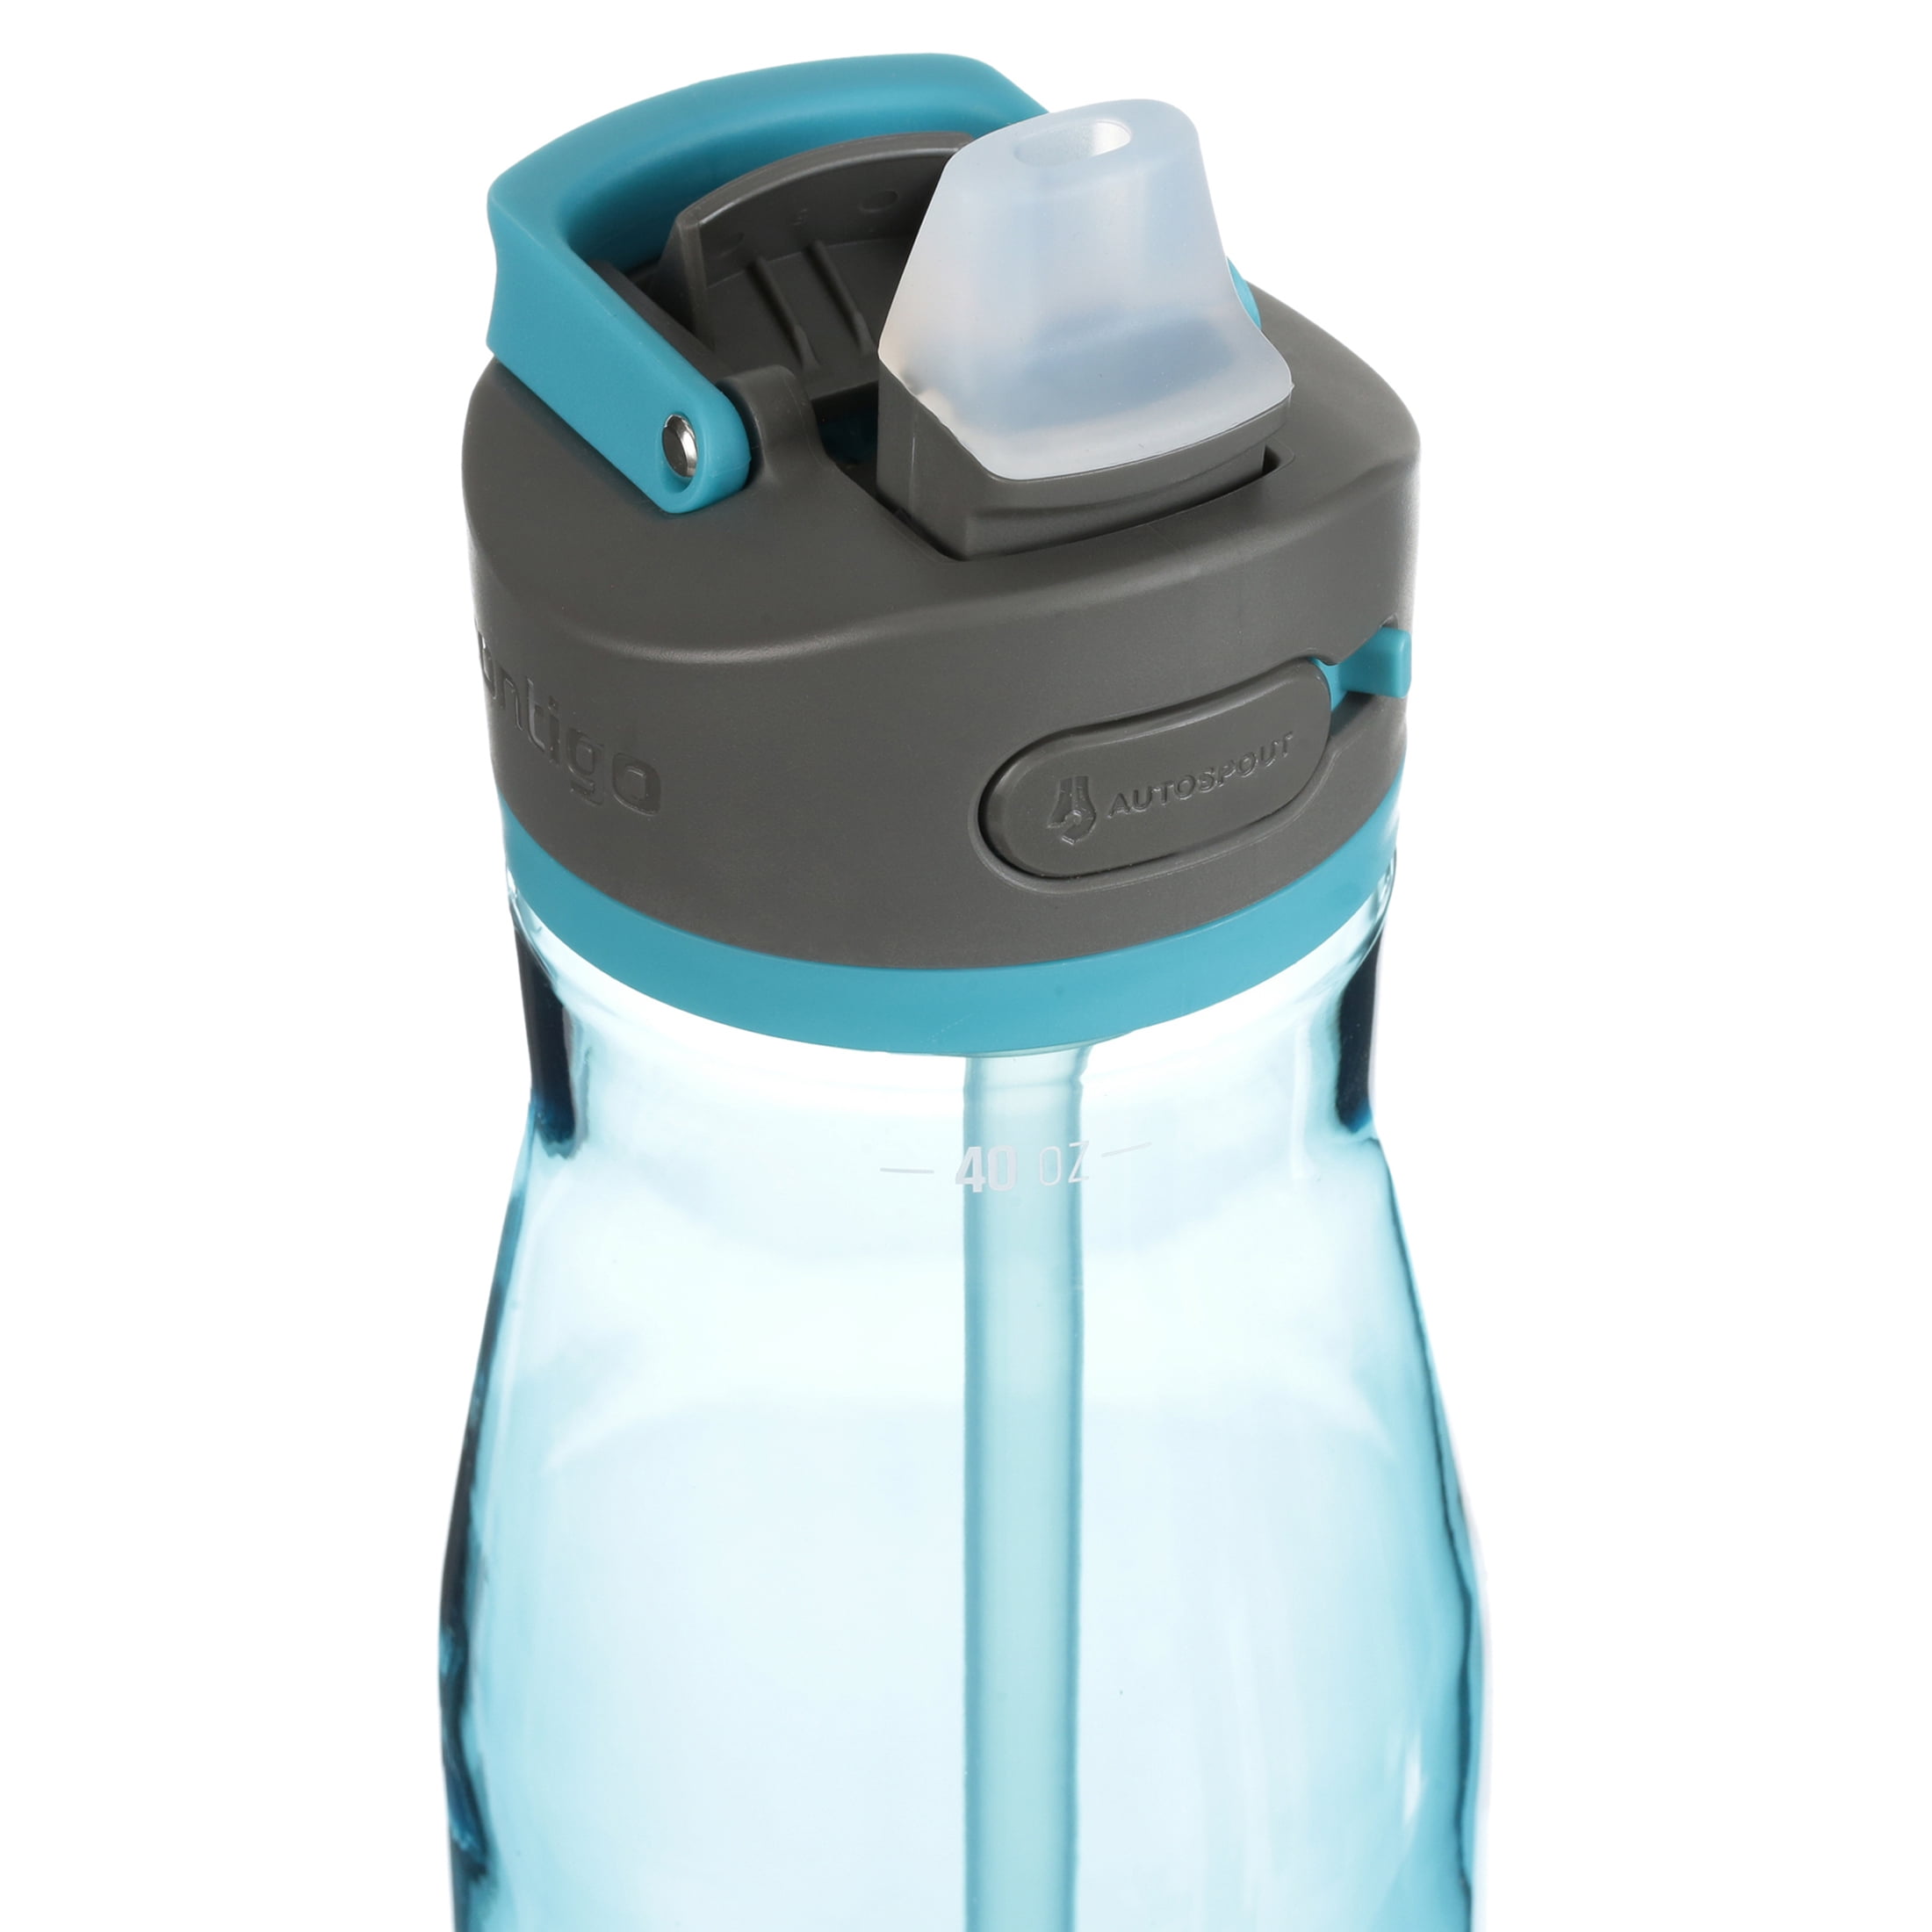 Contigo 24 oz. Ashland 2.0 Tritan Water Bottle with AutoSpout Lid - Bubble  Tea